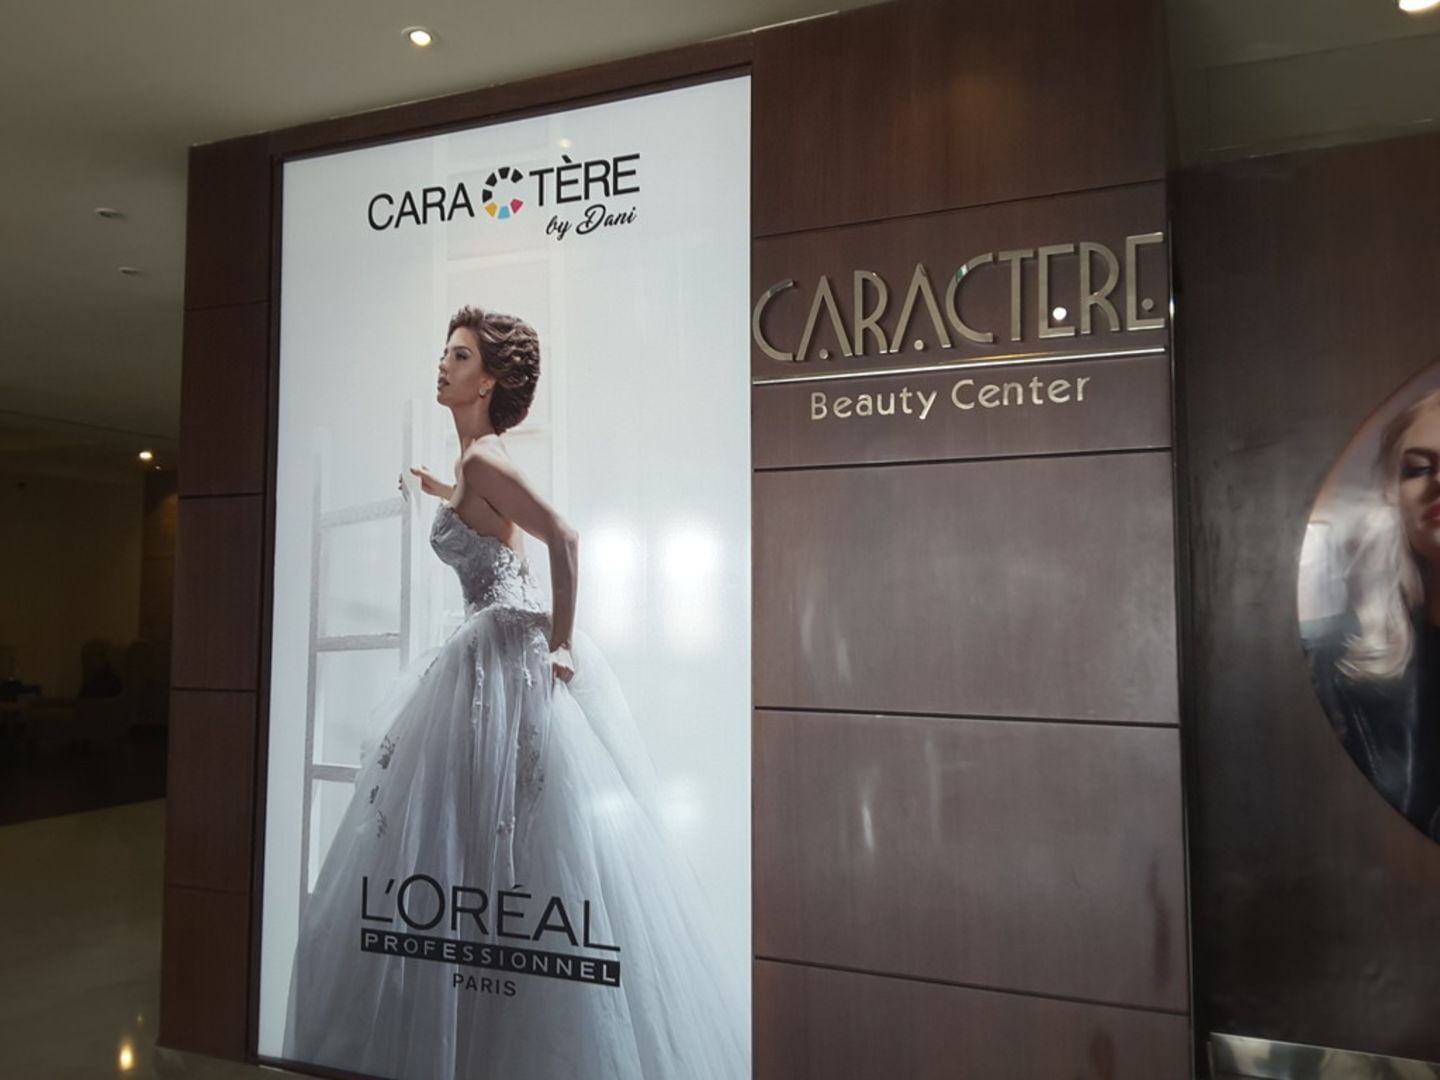 Caractere Beauty Center Dubai